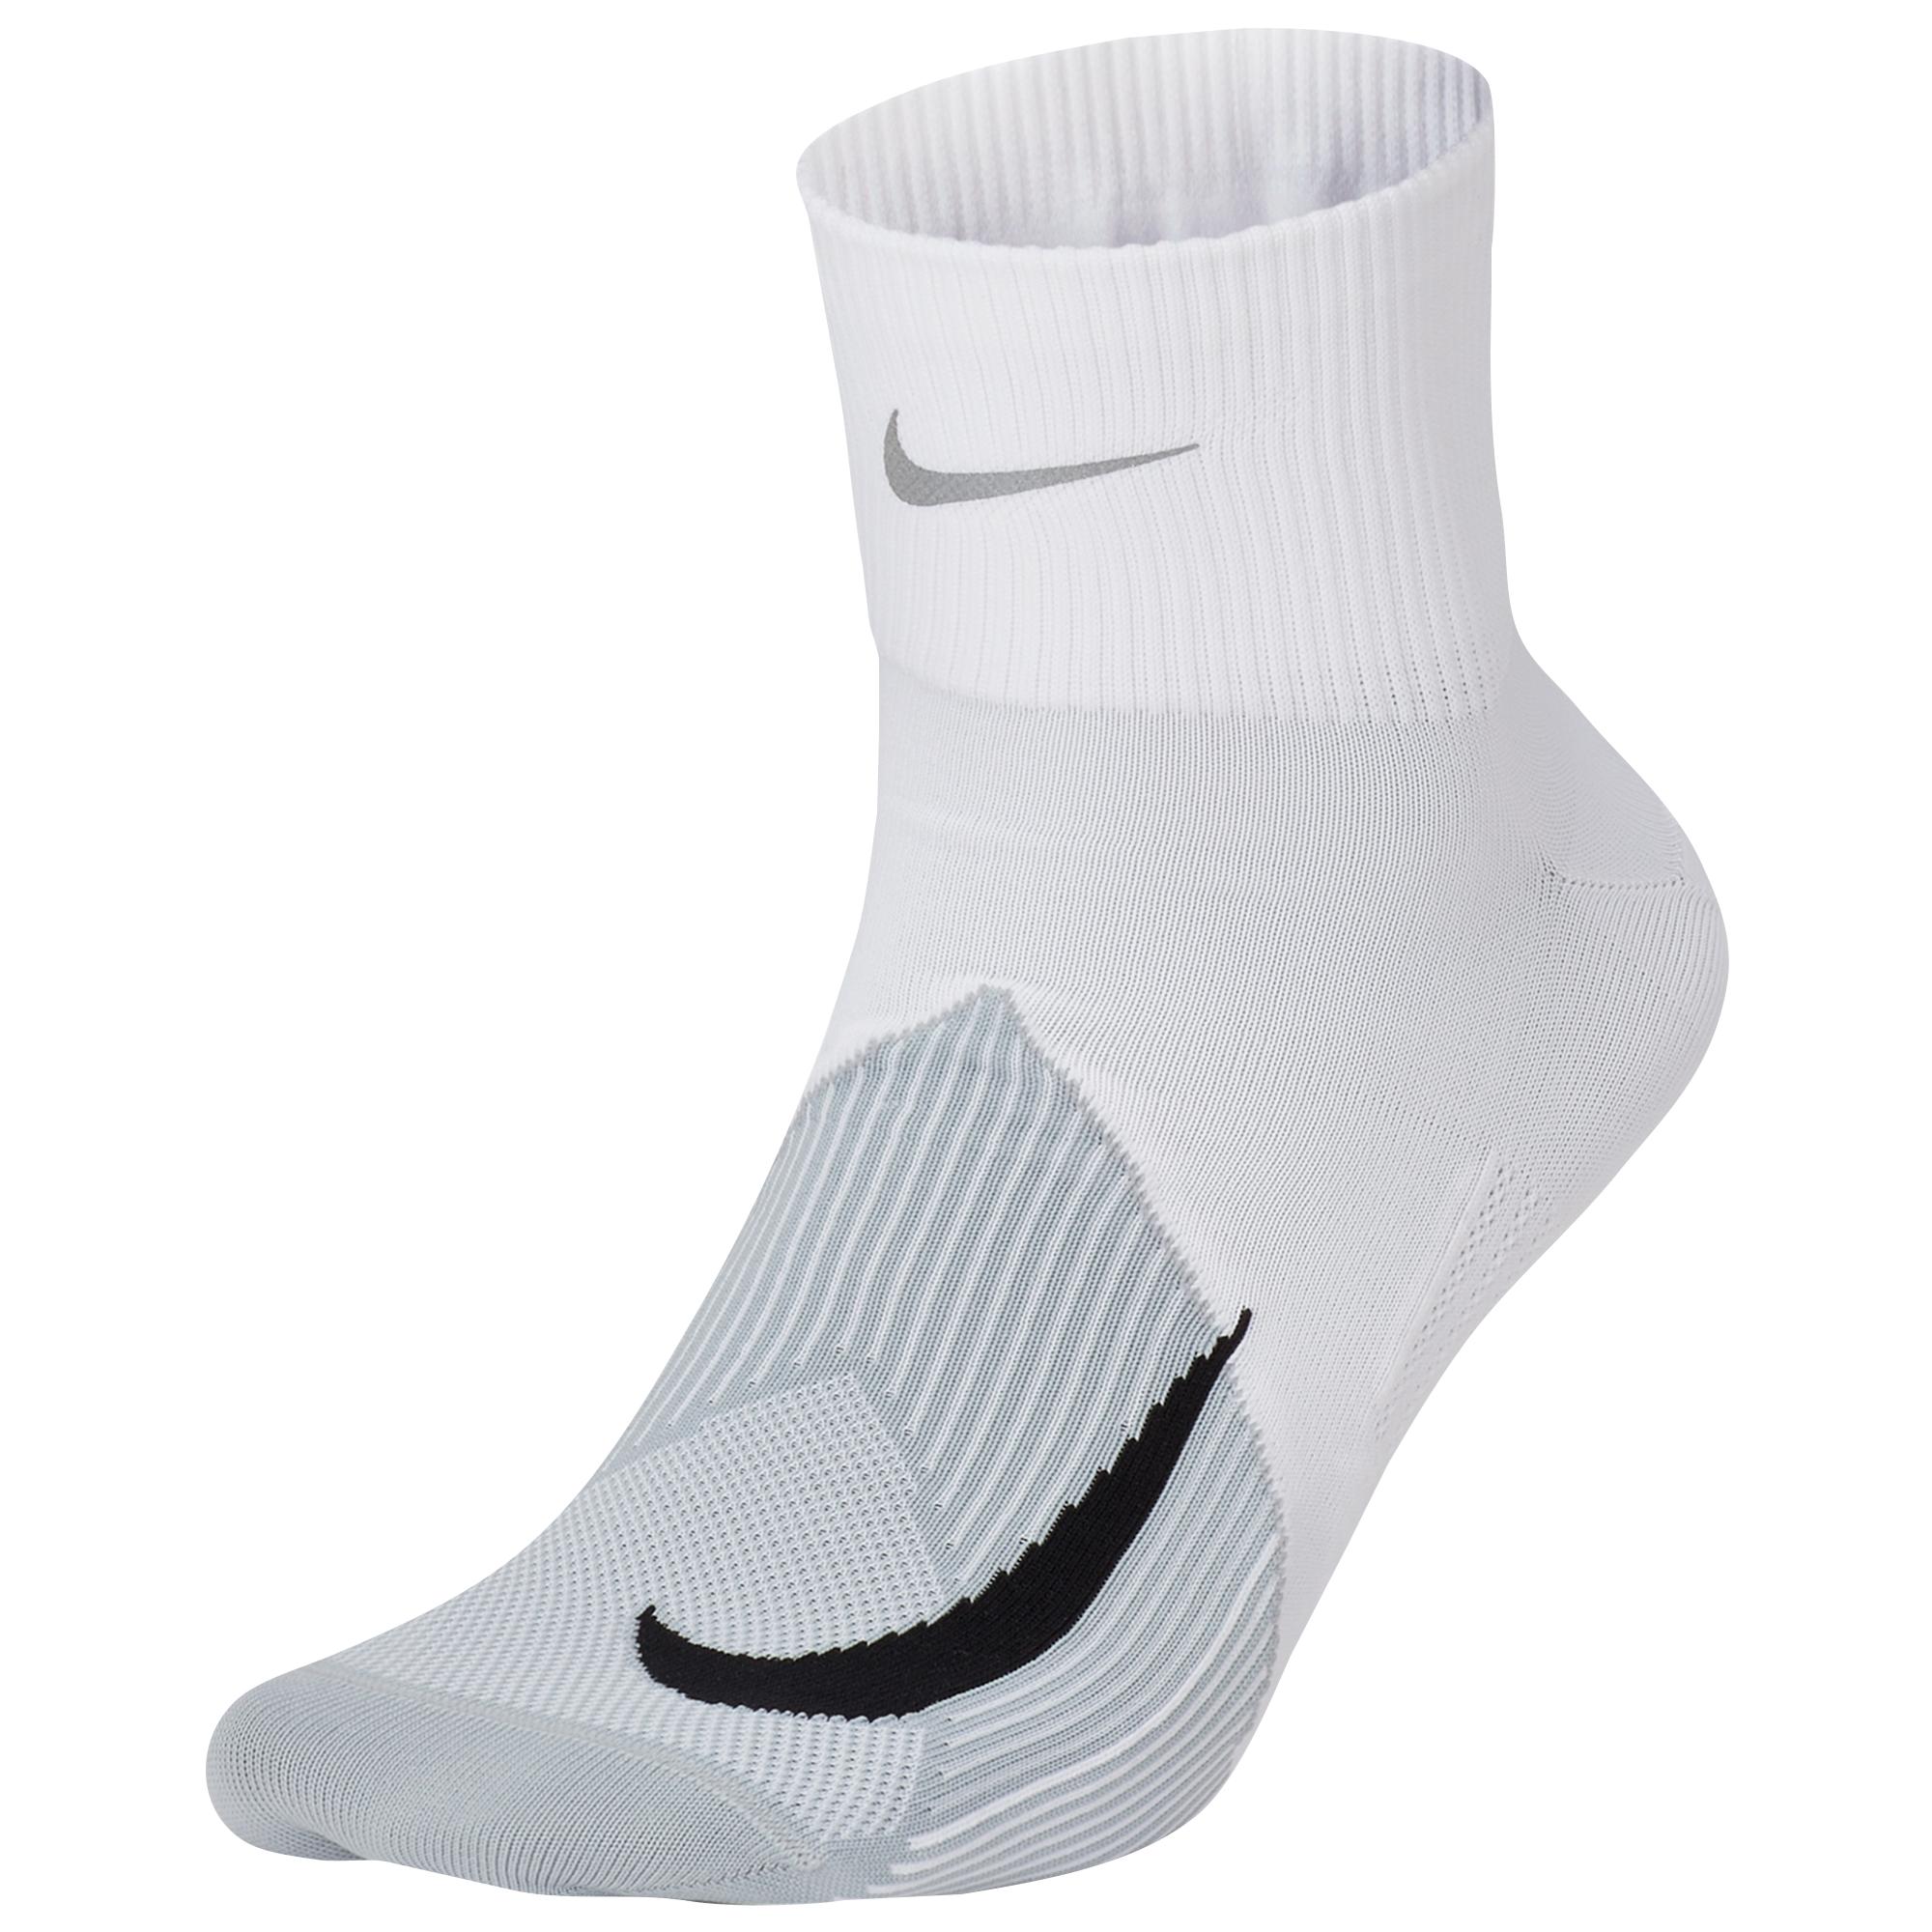 Nike Synthetic Spark Lightweight Ankle Socks in Gray for Men - Lyst